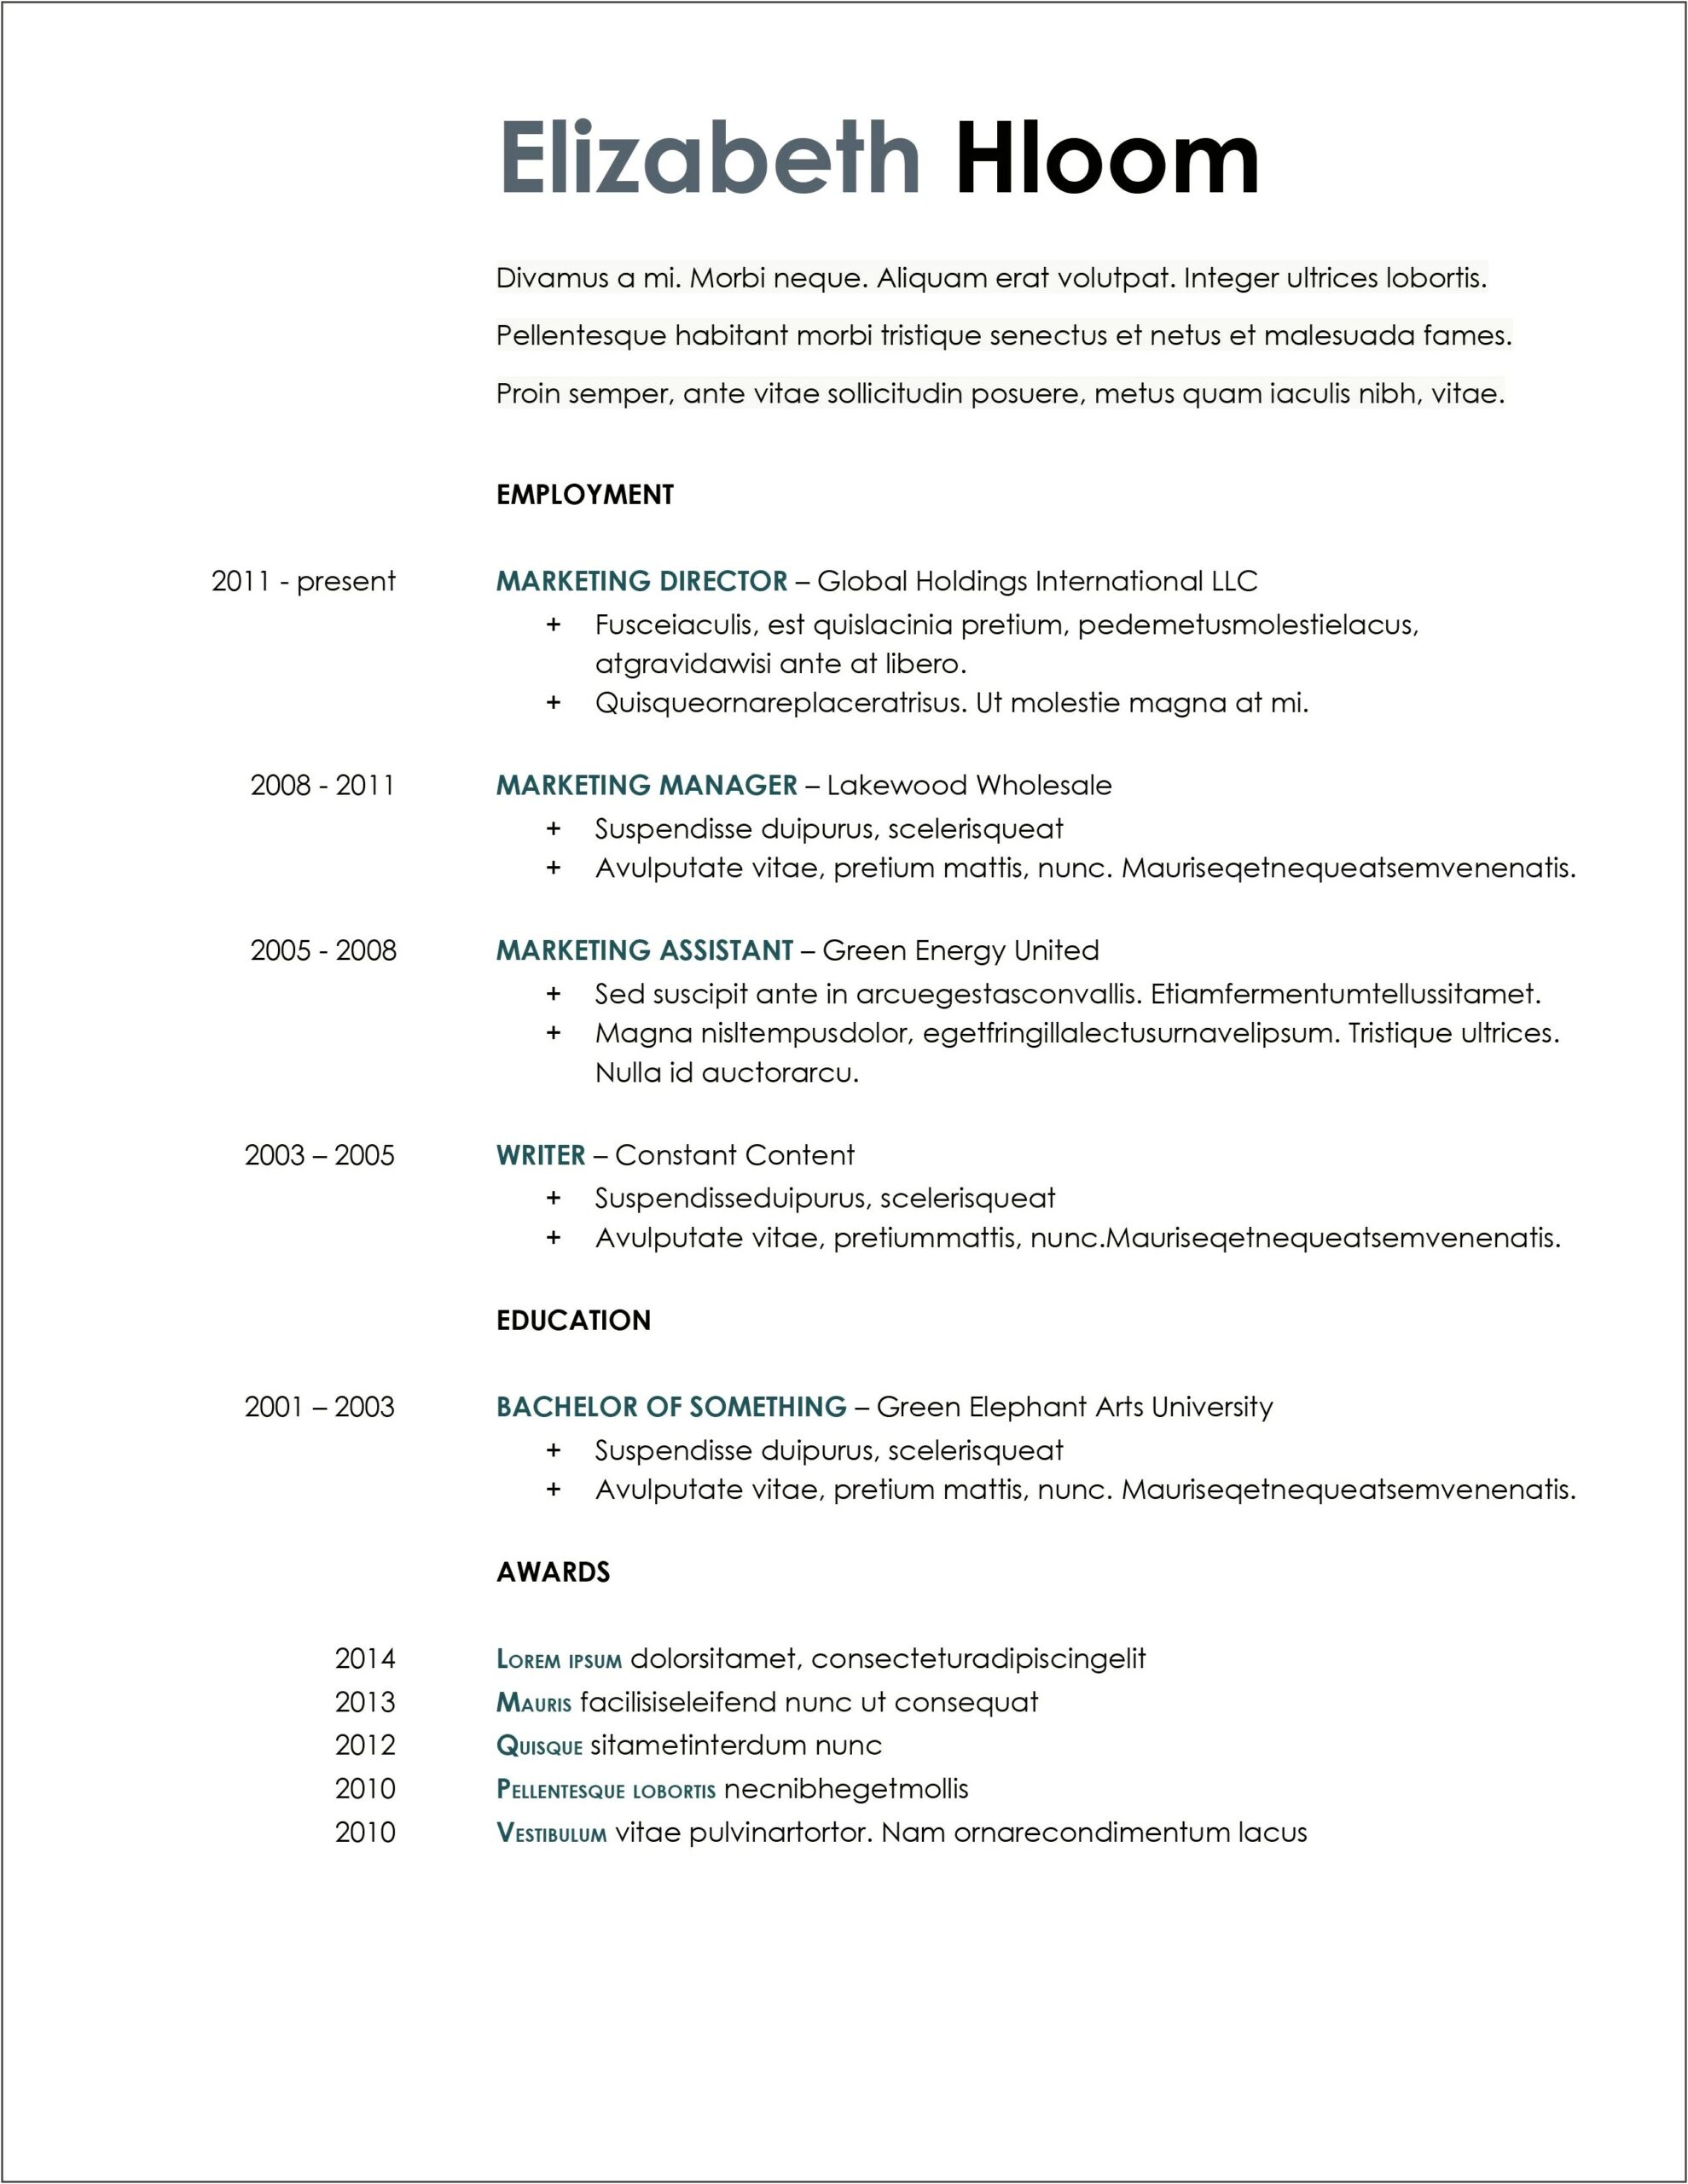 Resume Layout On Microsoft Word 2010